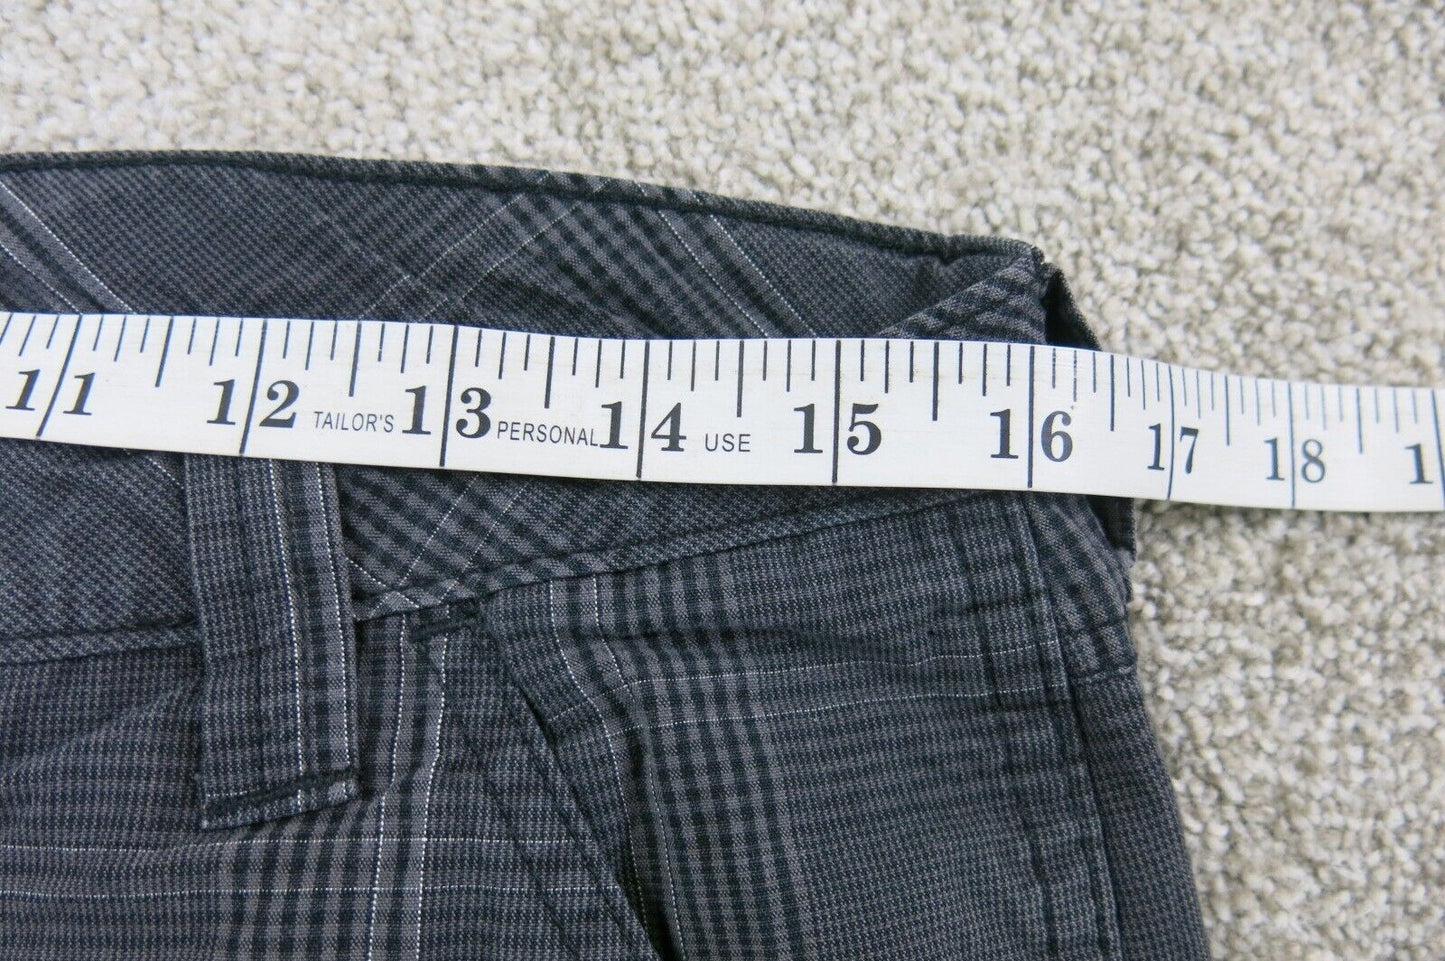 Wrangler Shorts Mens 32 Black Plaid Cargo Pockets 100% Cotton Casual Outdoors